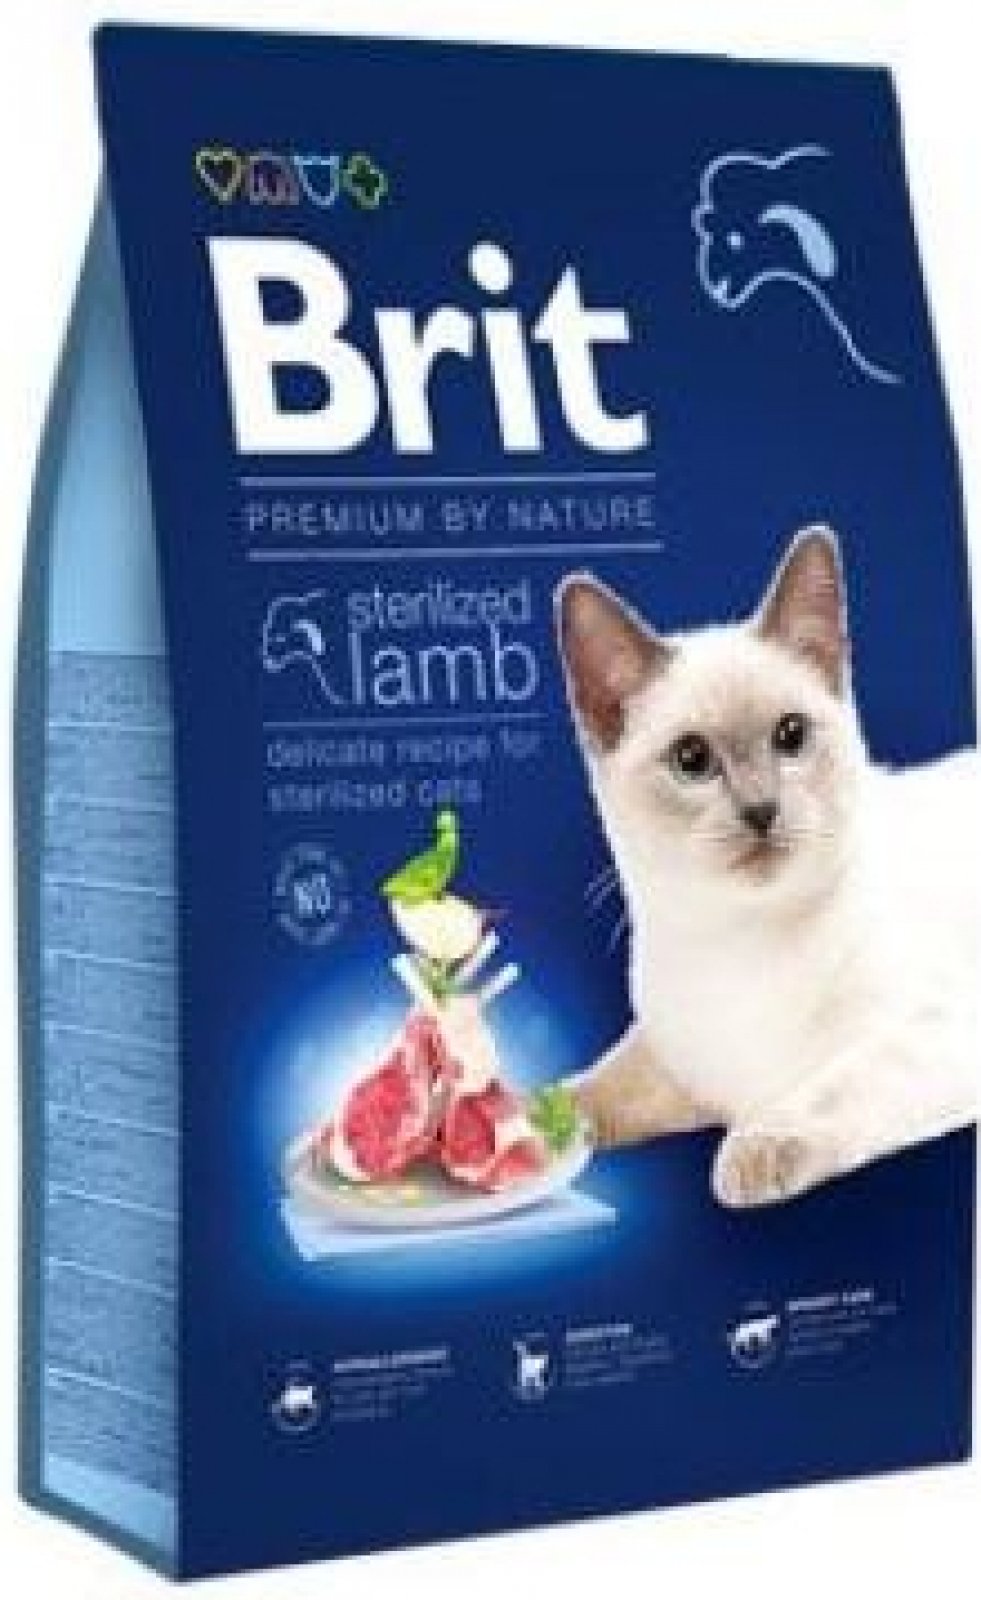 Brit Premium by Nature Cat Steril. Lamb 300 g